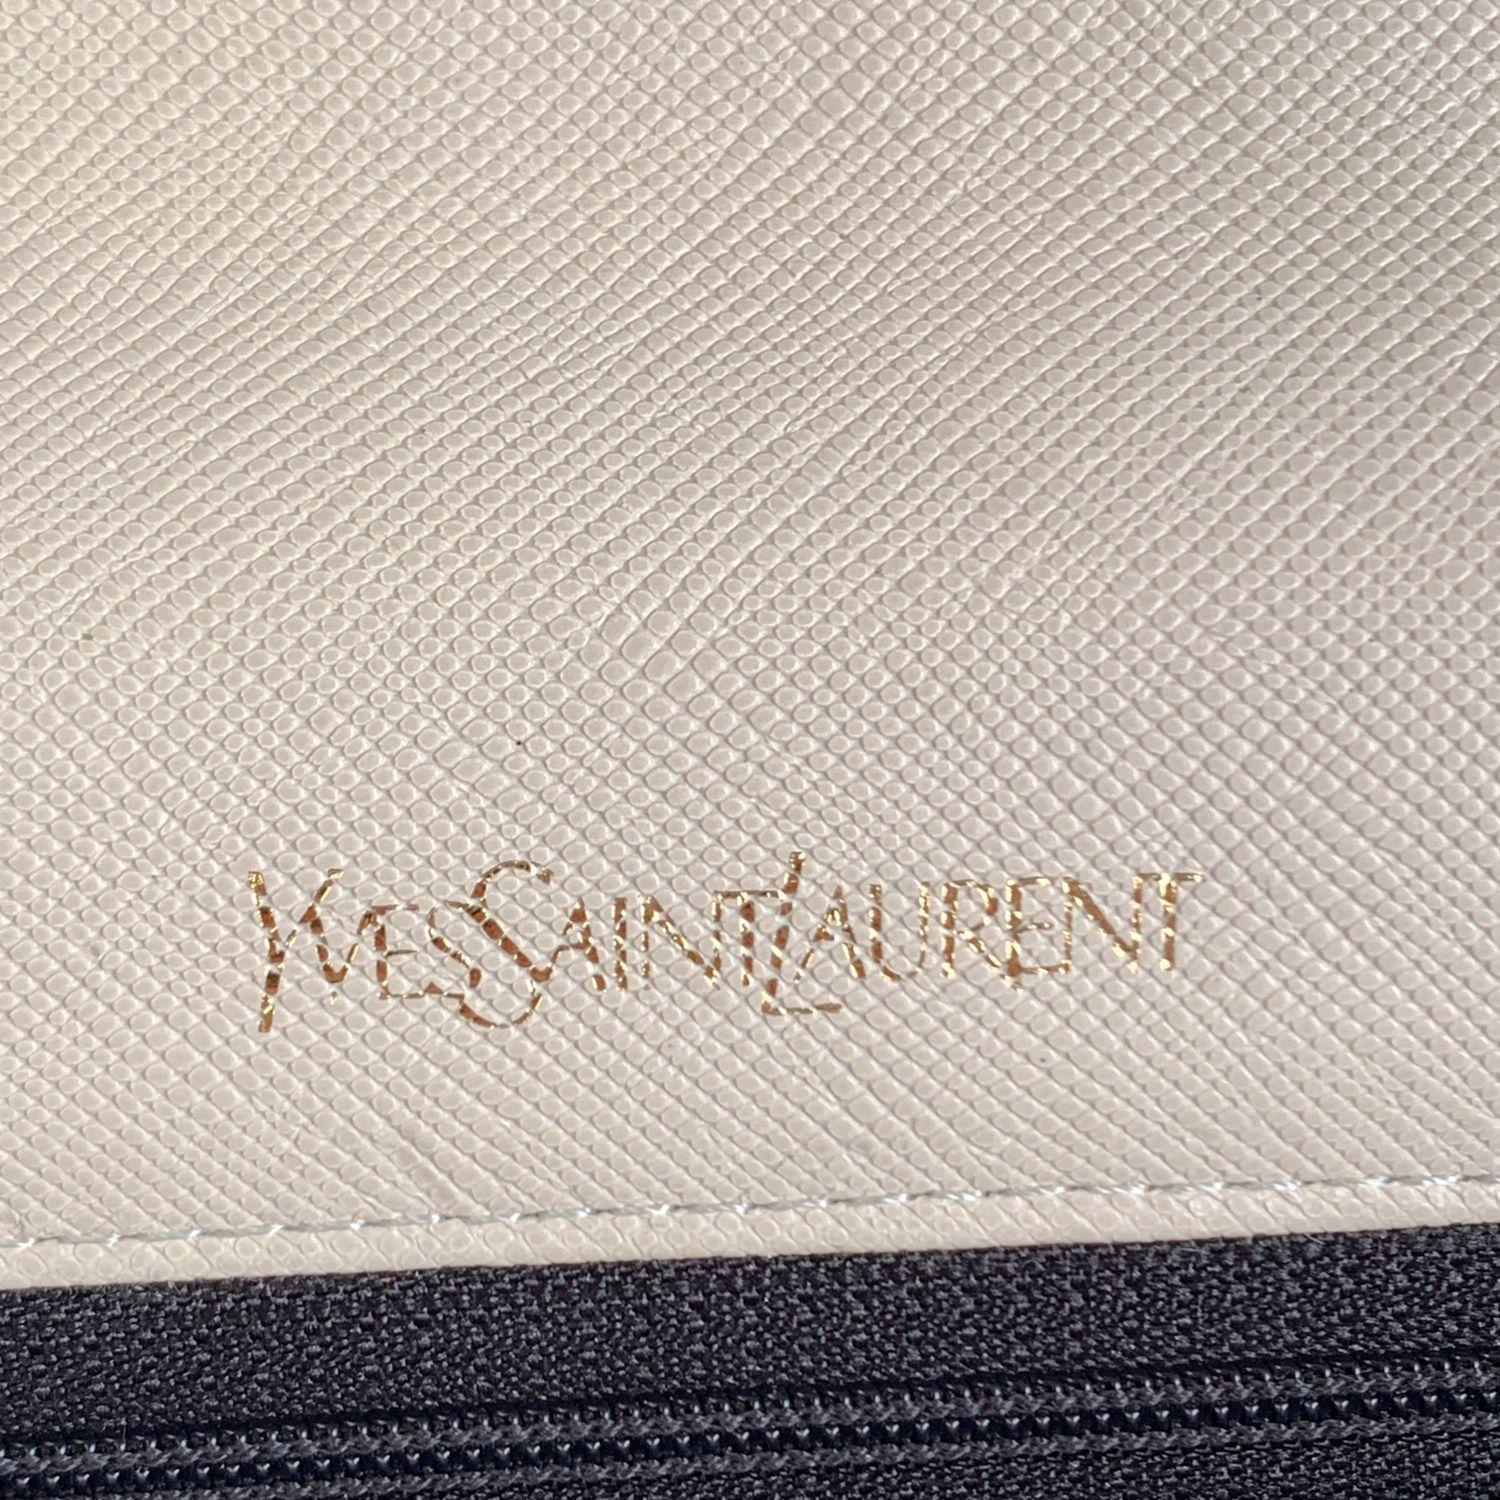 Yves Saint Laurent Vintage White Leather Clutch Bag 2